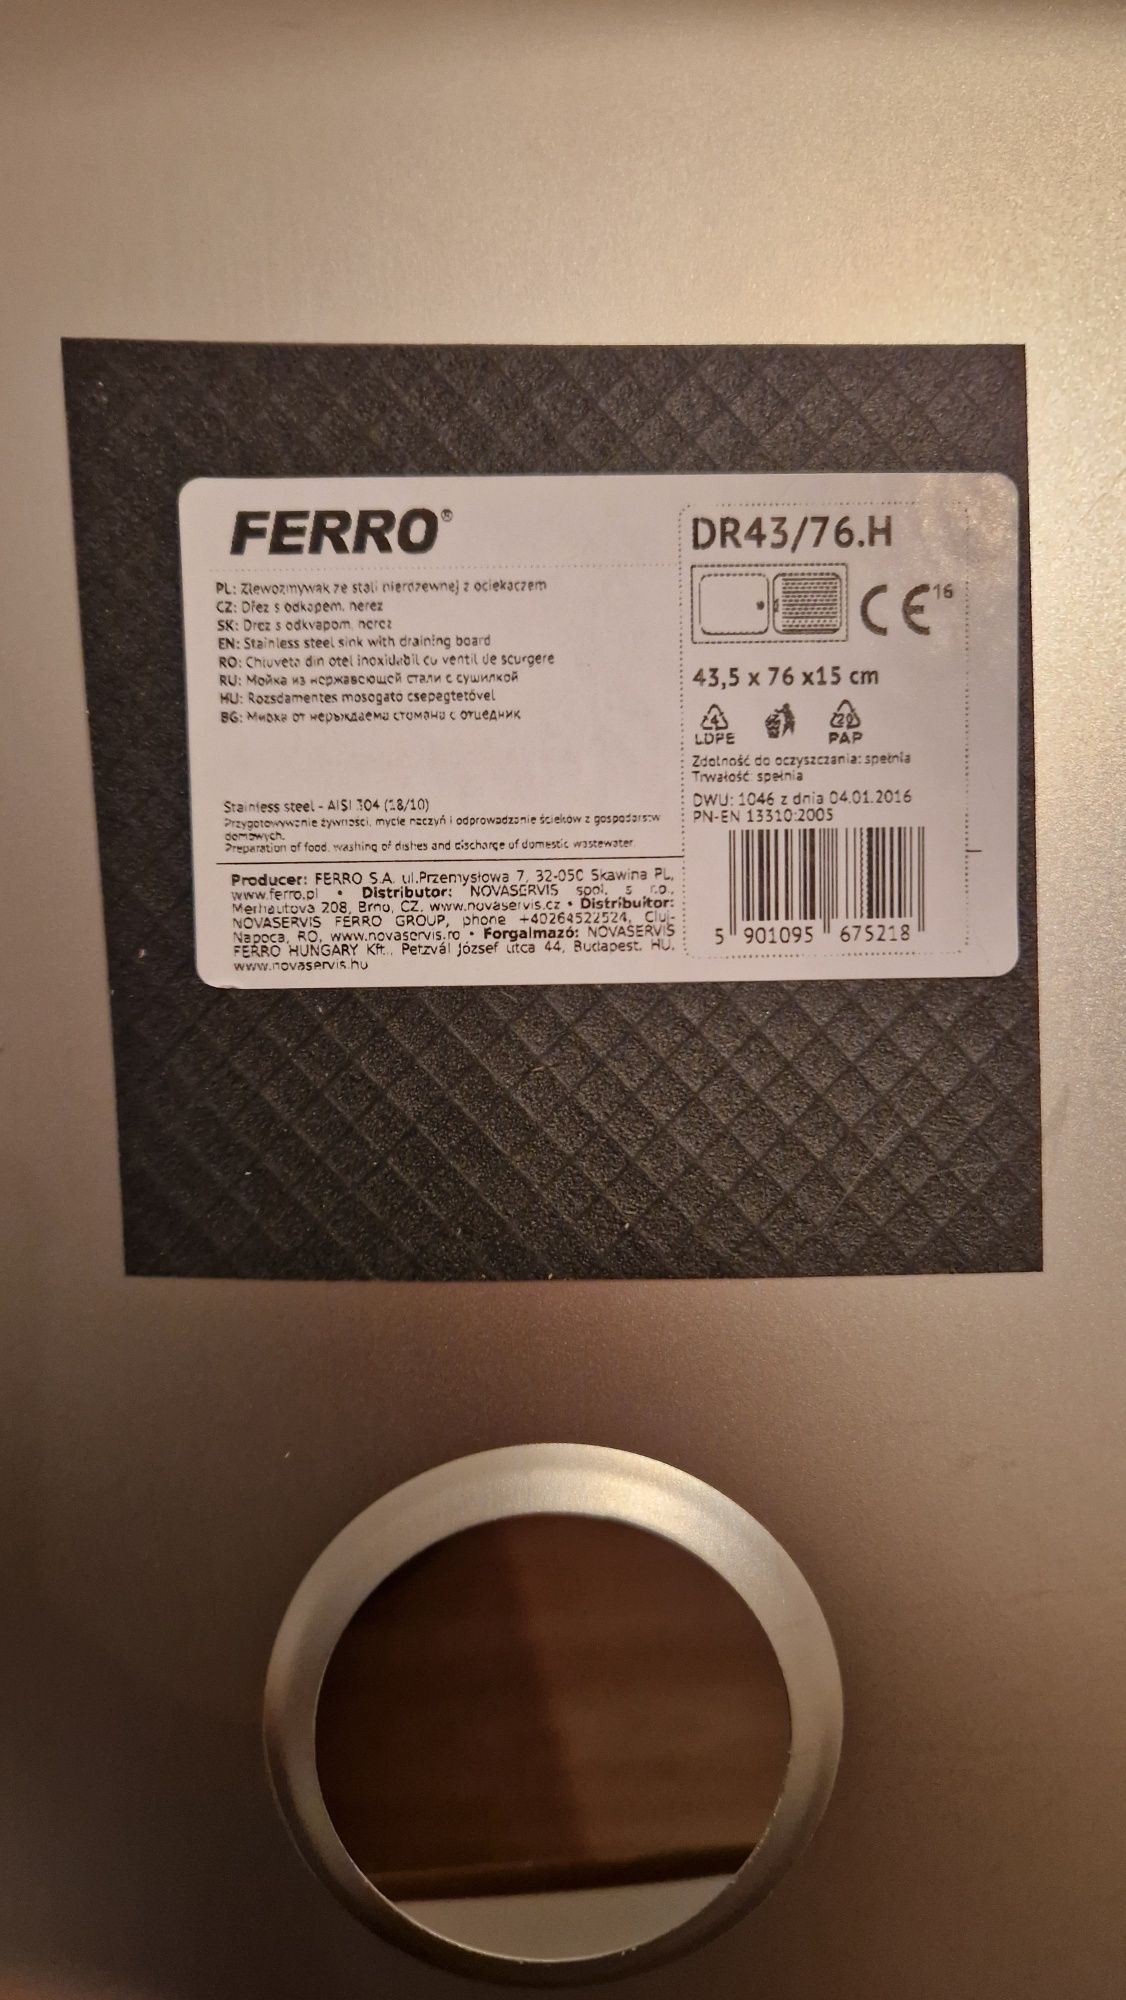 Chiuveta Ferro Stainless Steel DR43/76.H